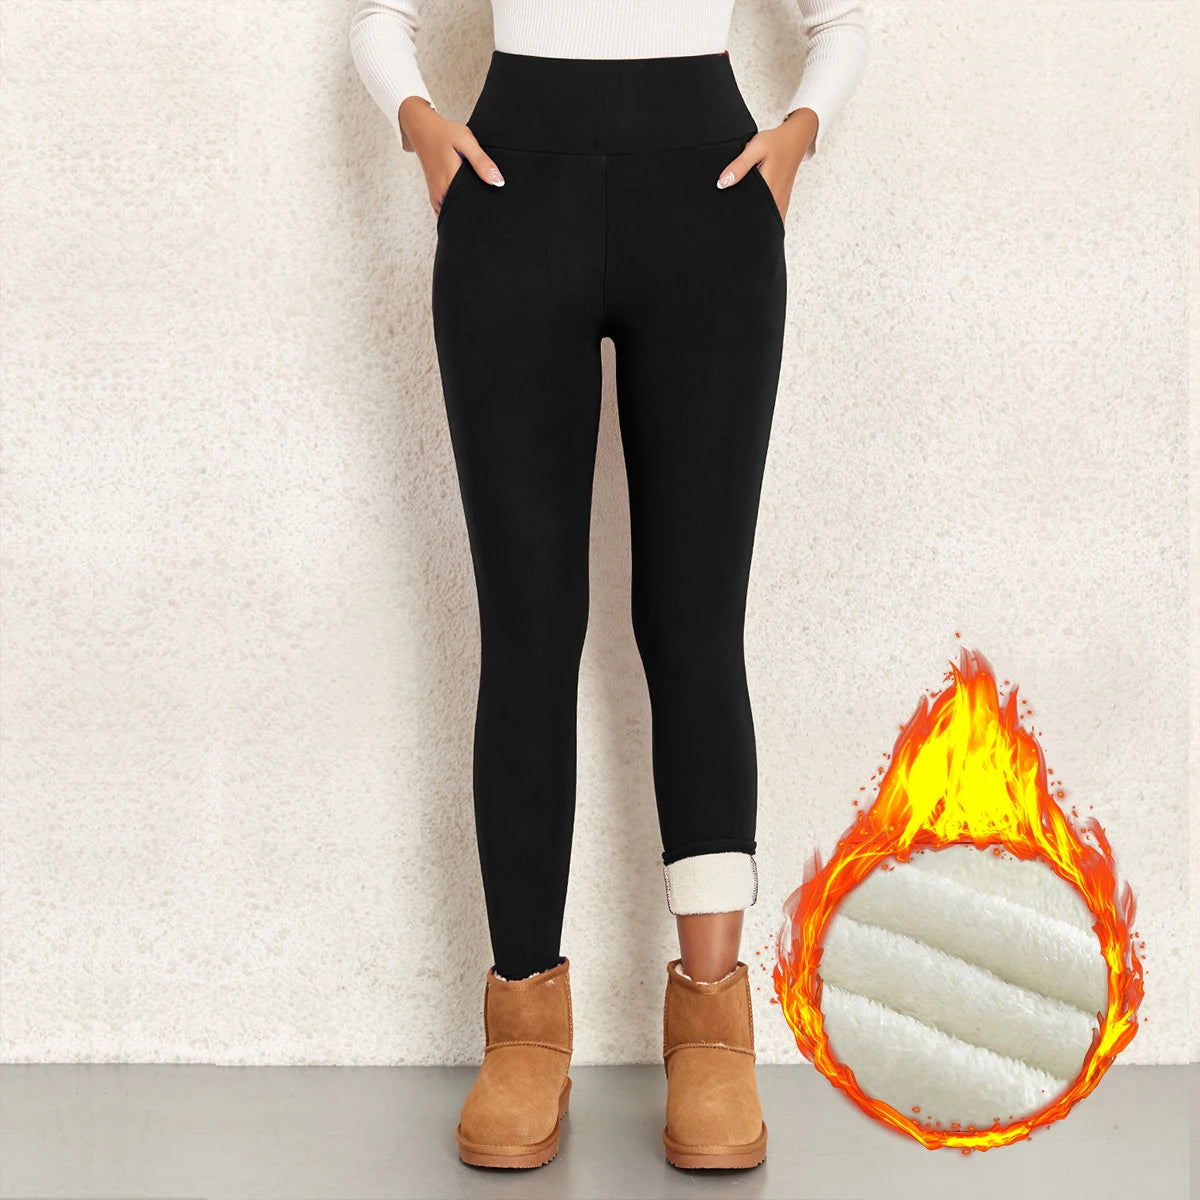 NORMOV Women Winter Leggings / Thermal Pants Fleece Legging